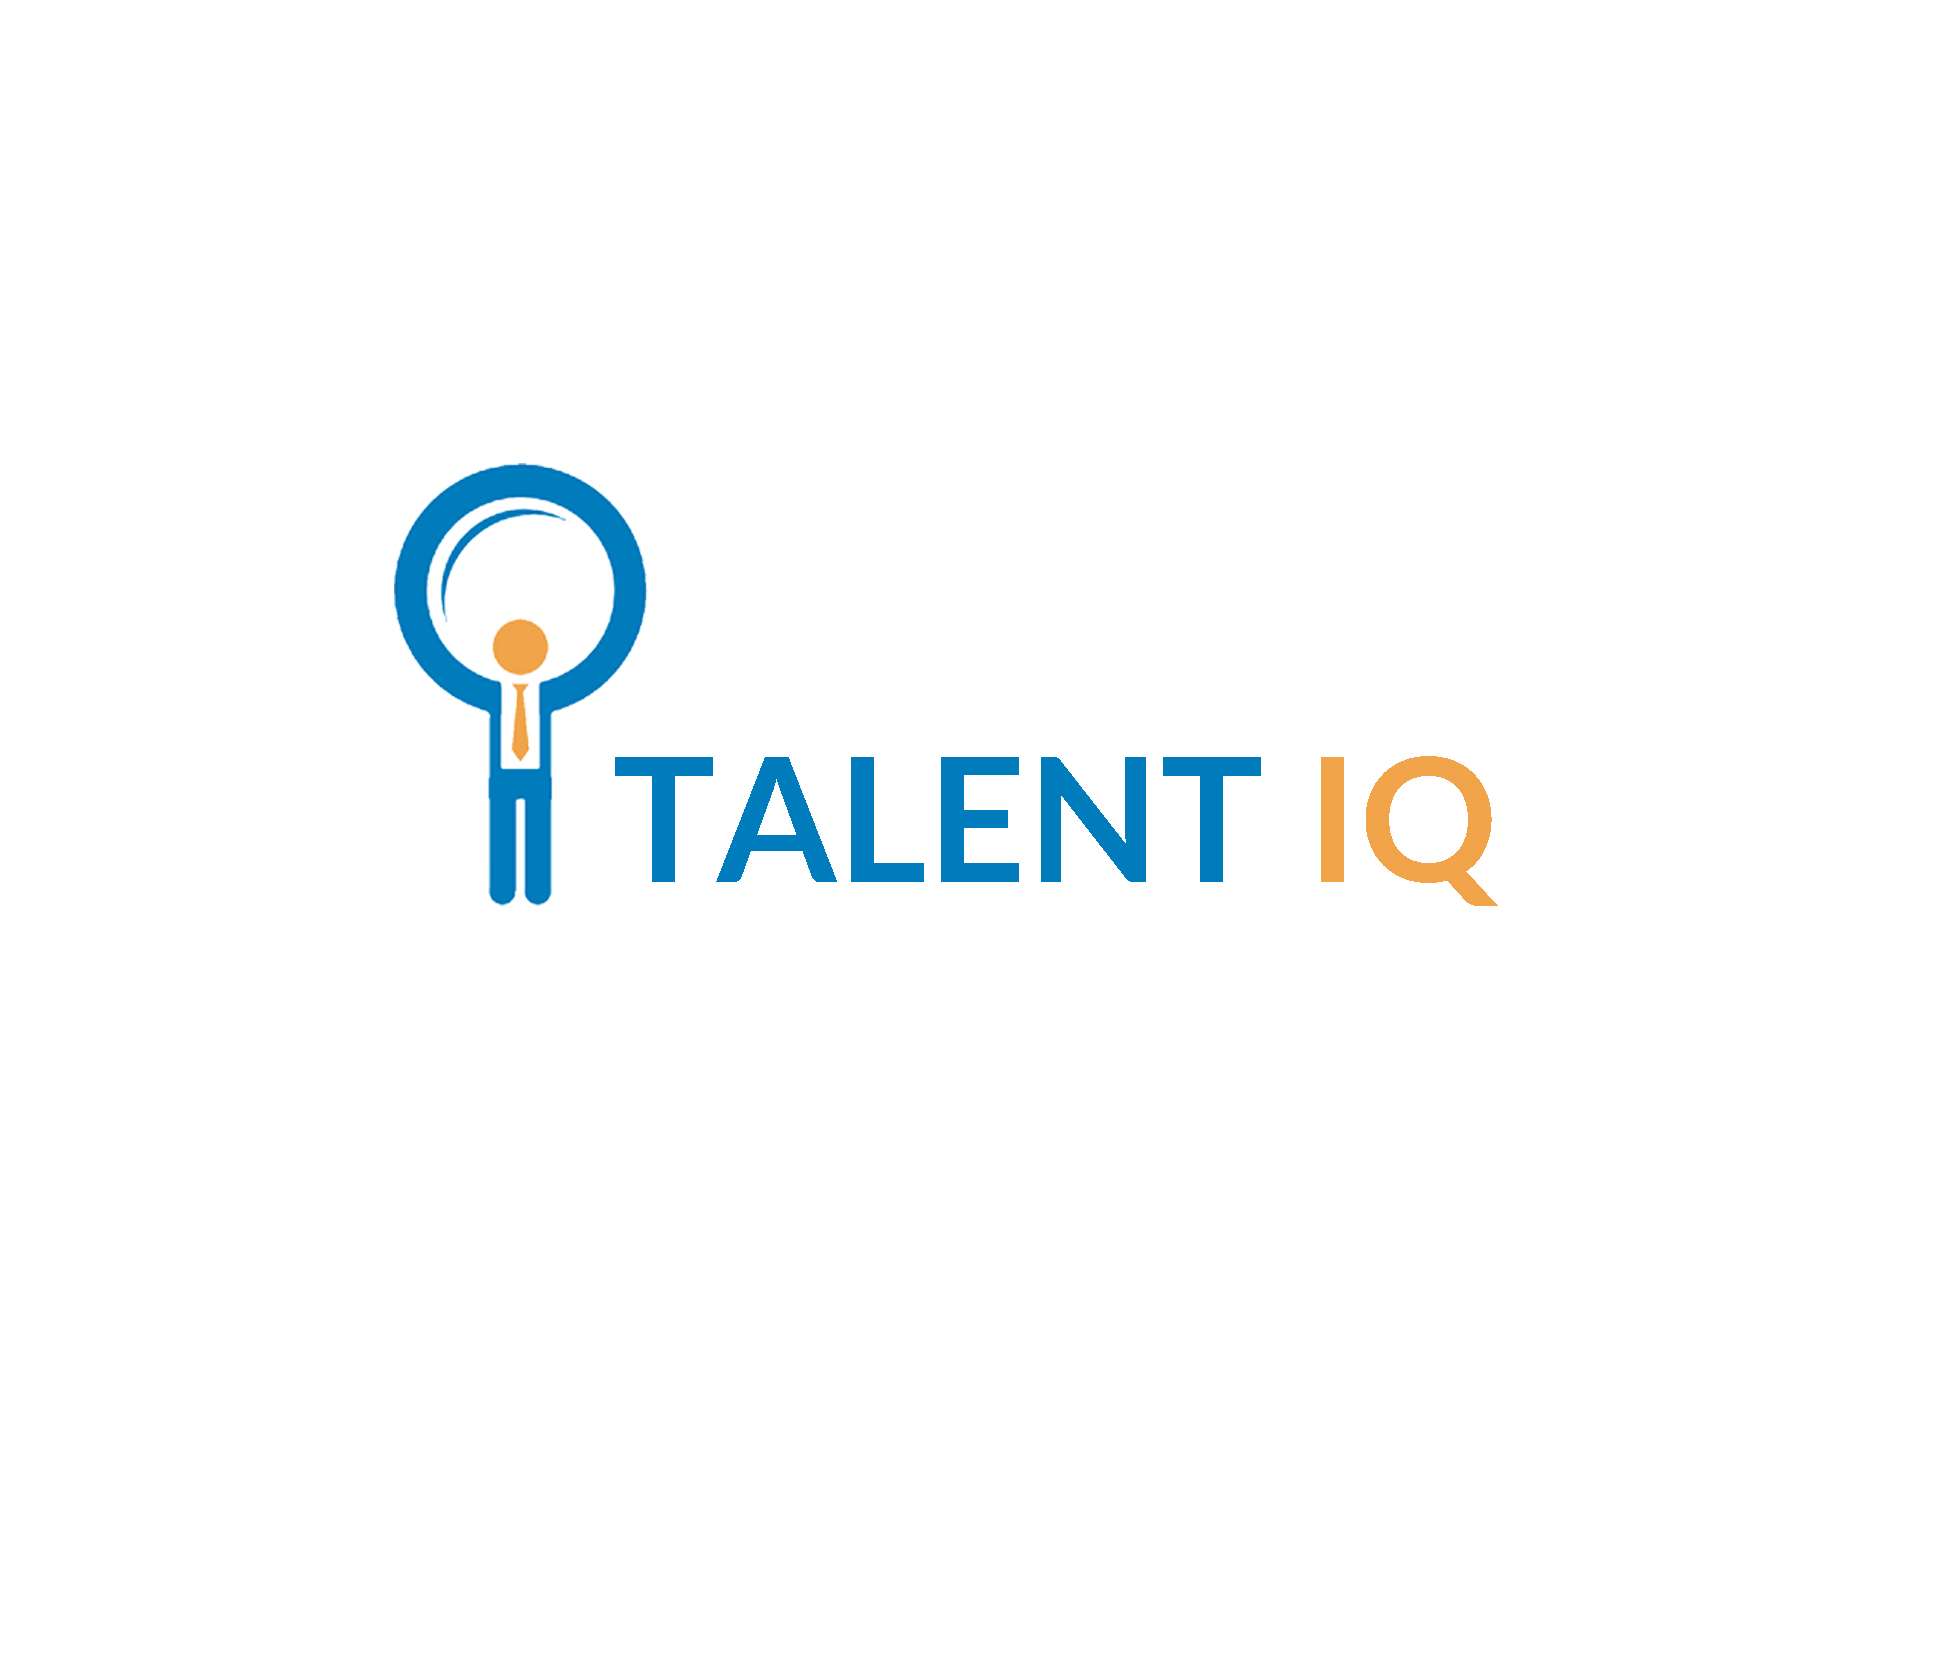 IQ logo 2 - Pacific Northwest